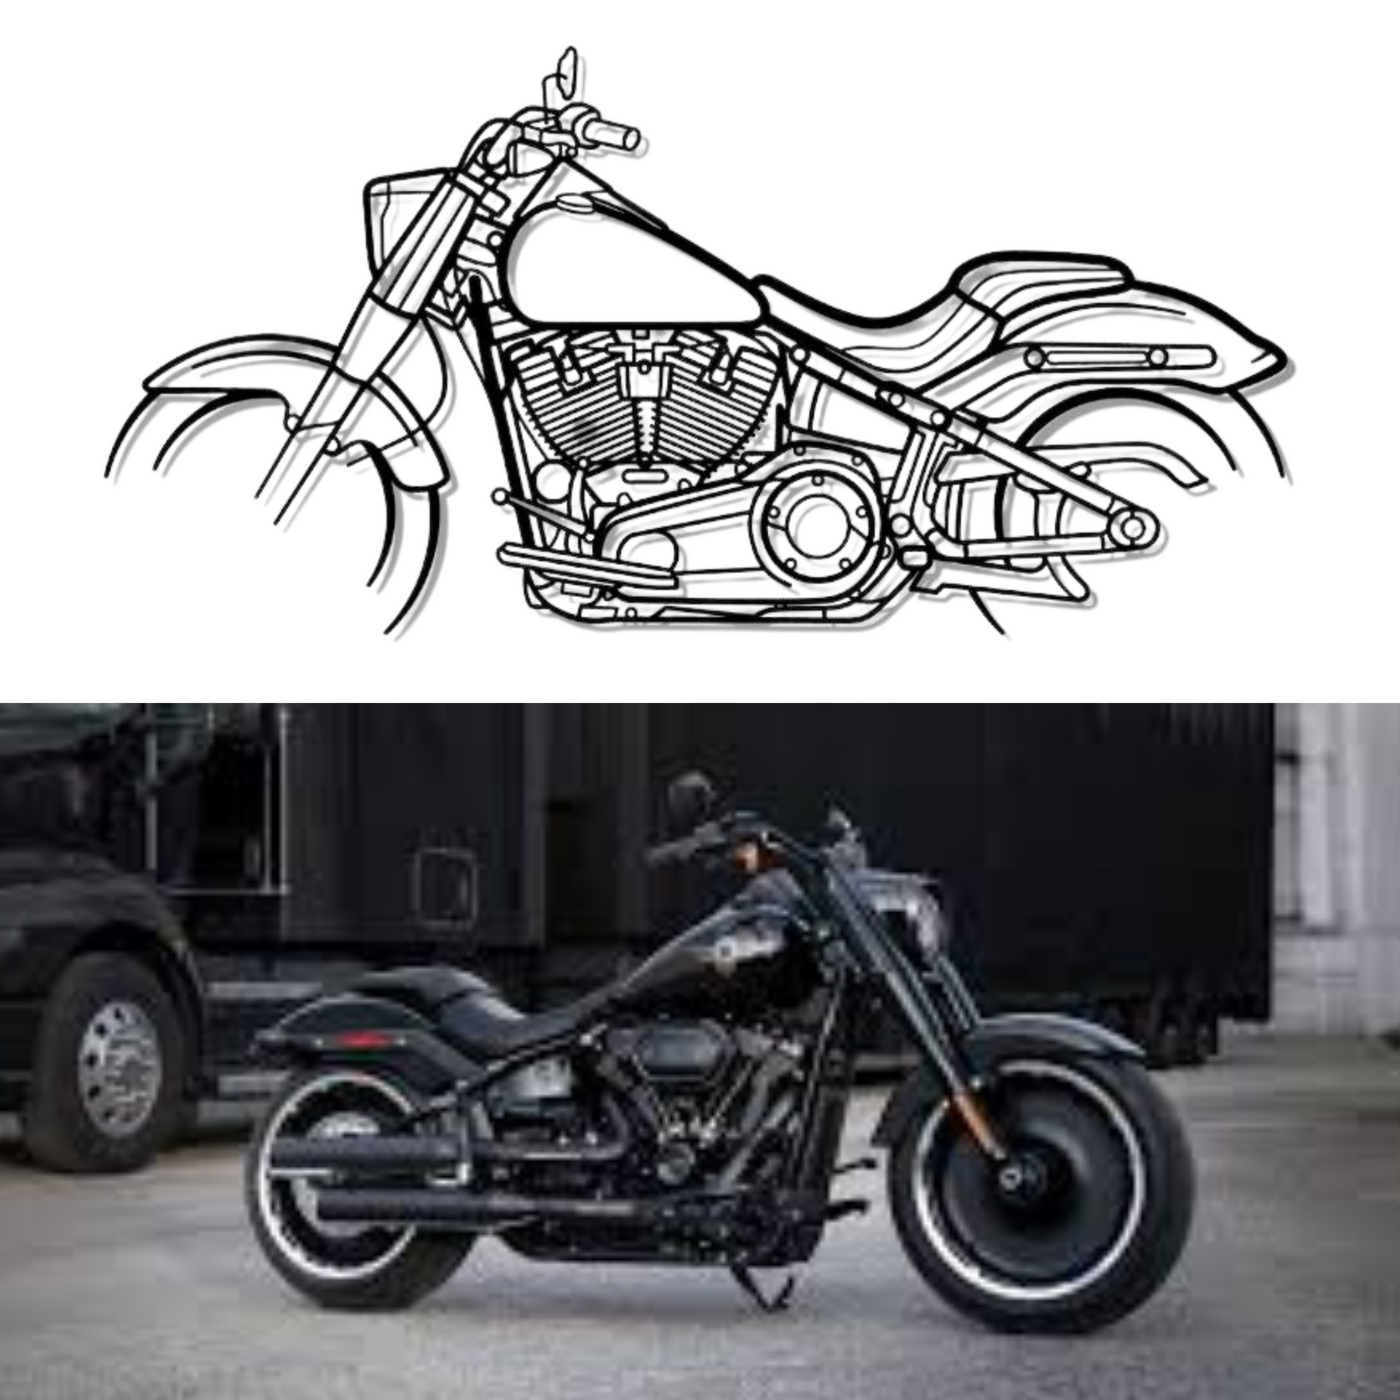 Harley Fat Boy Motorcycle Silhouette Metal Wall Art